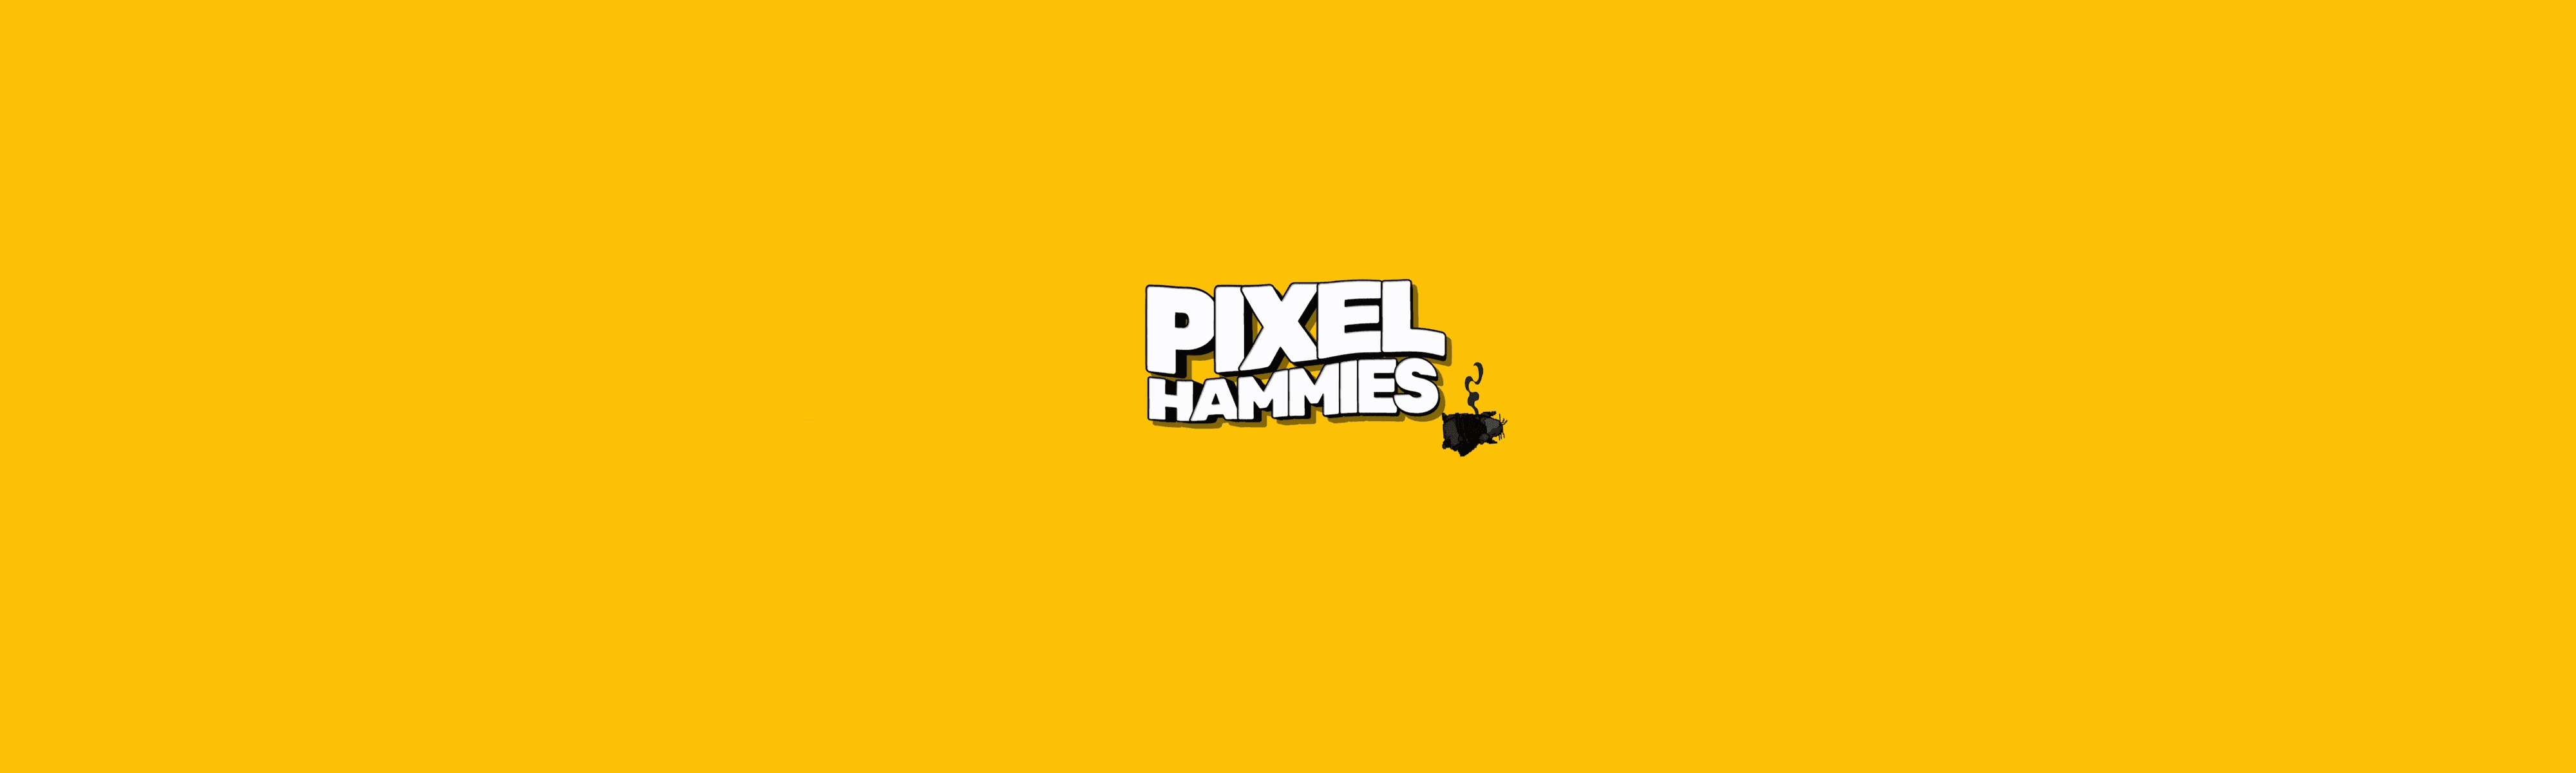 PixelHammies banner